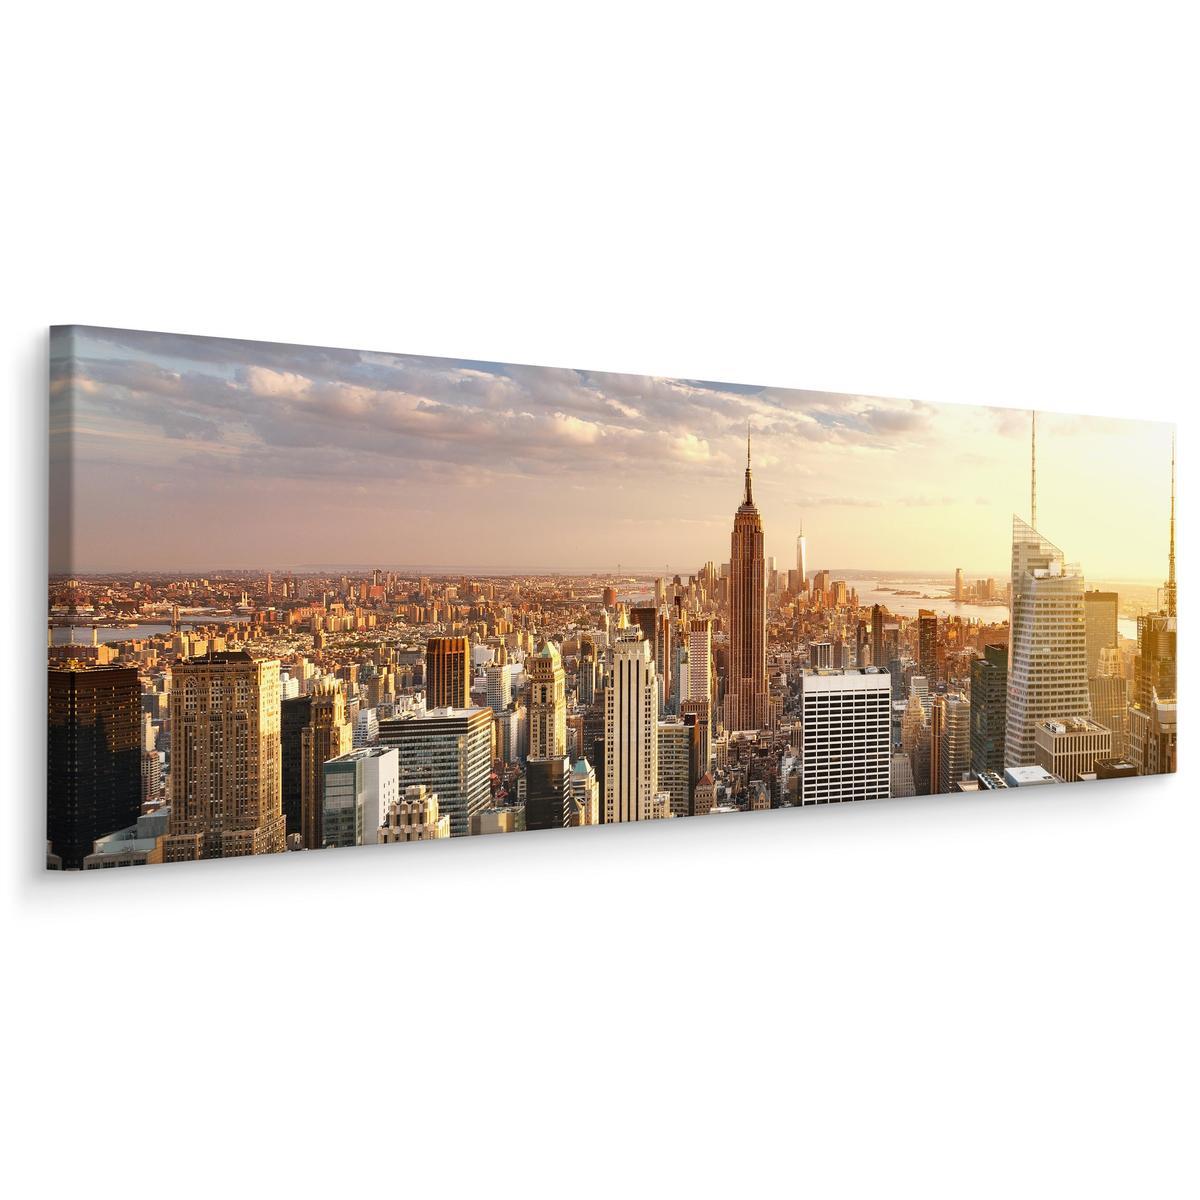 Obraz Do Biura Panorama NOWEGO YORKU Miasto Architektura 145x45cm 0 Full Screen